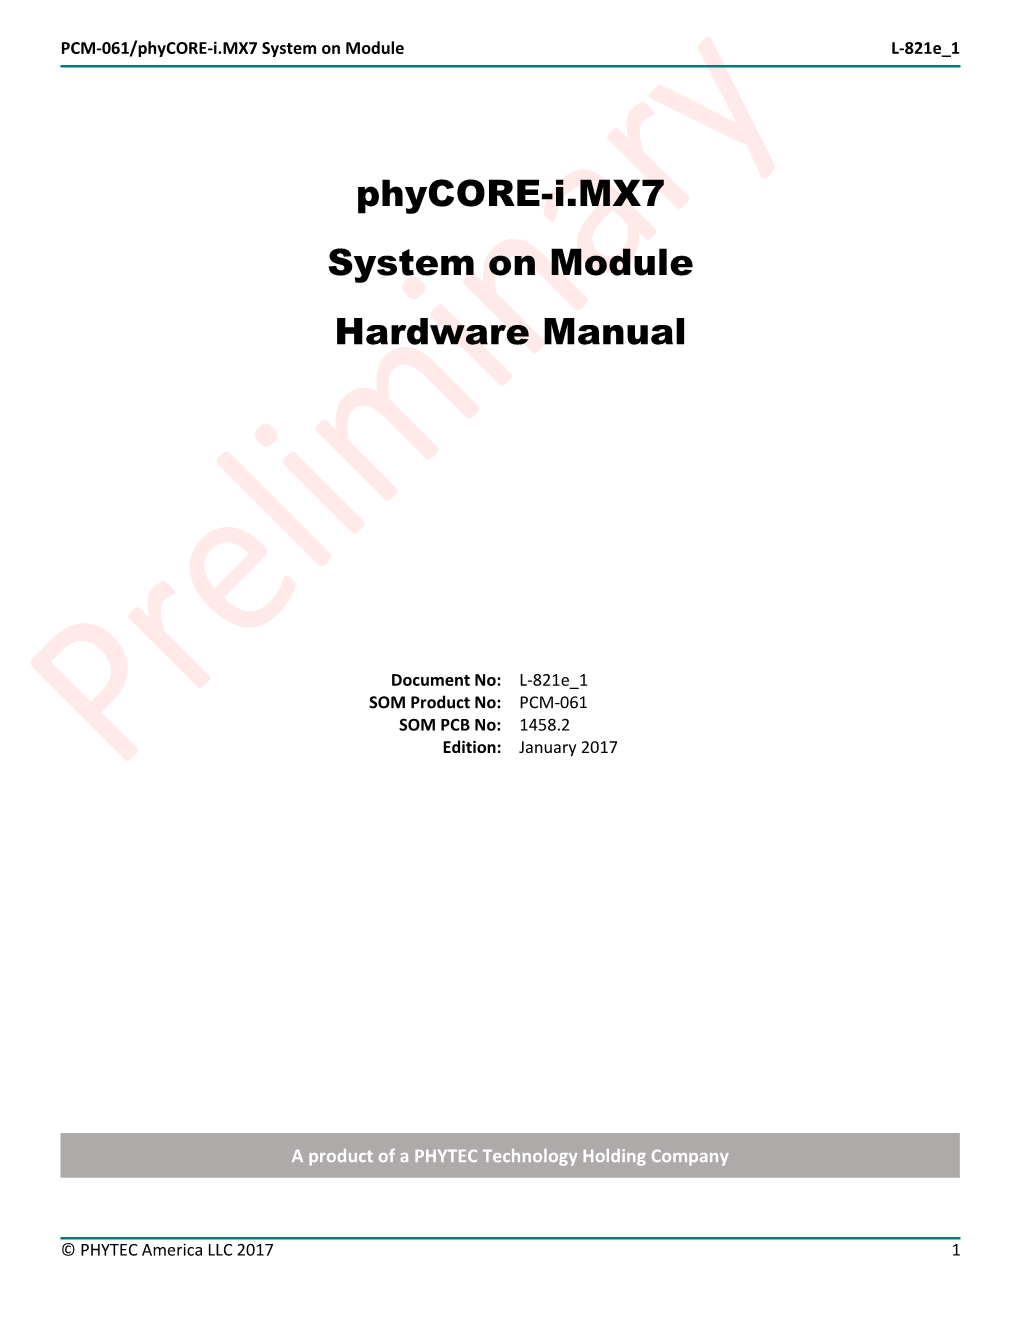 Phycore-I.MX7 System on Module Hardware Manual